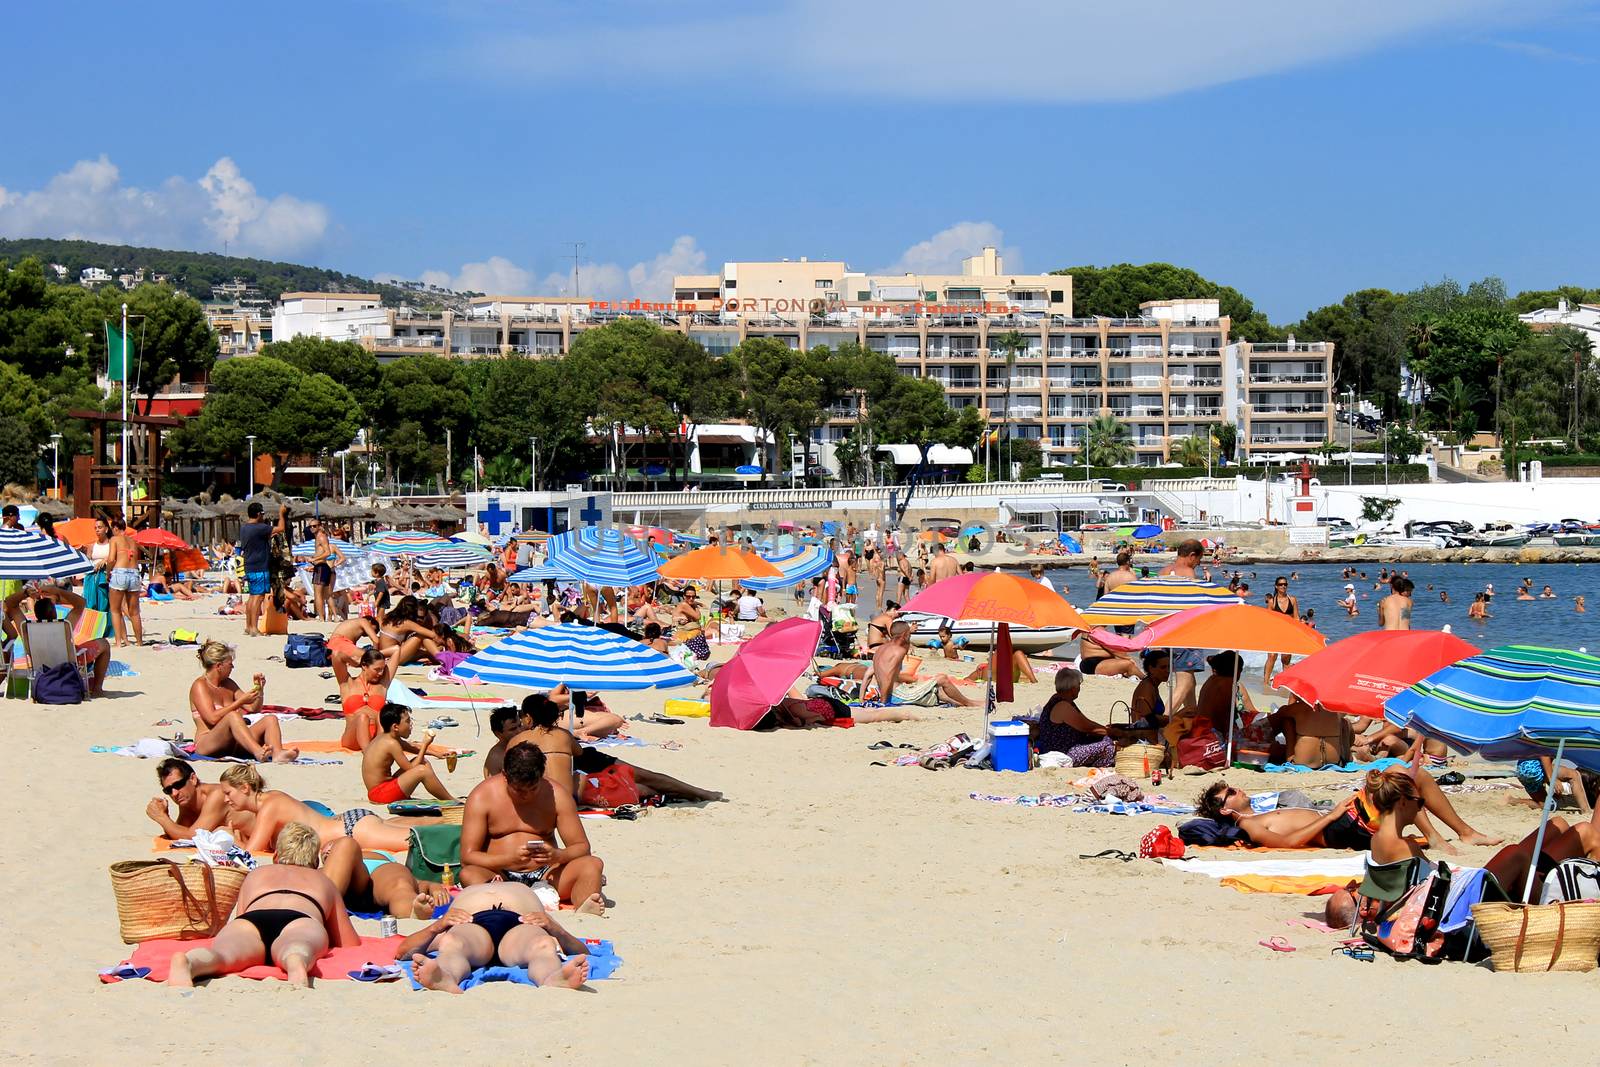 Palma Nova beach resort in Majorca by speedfighter